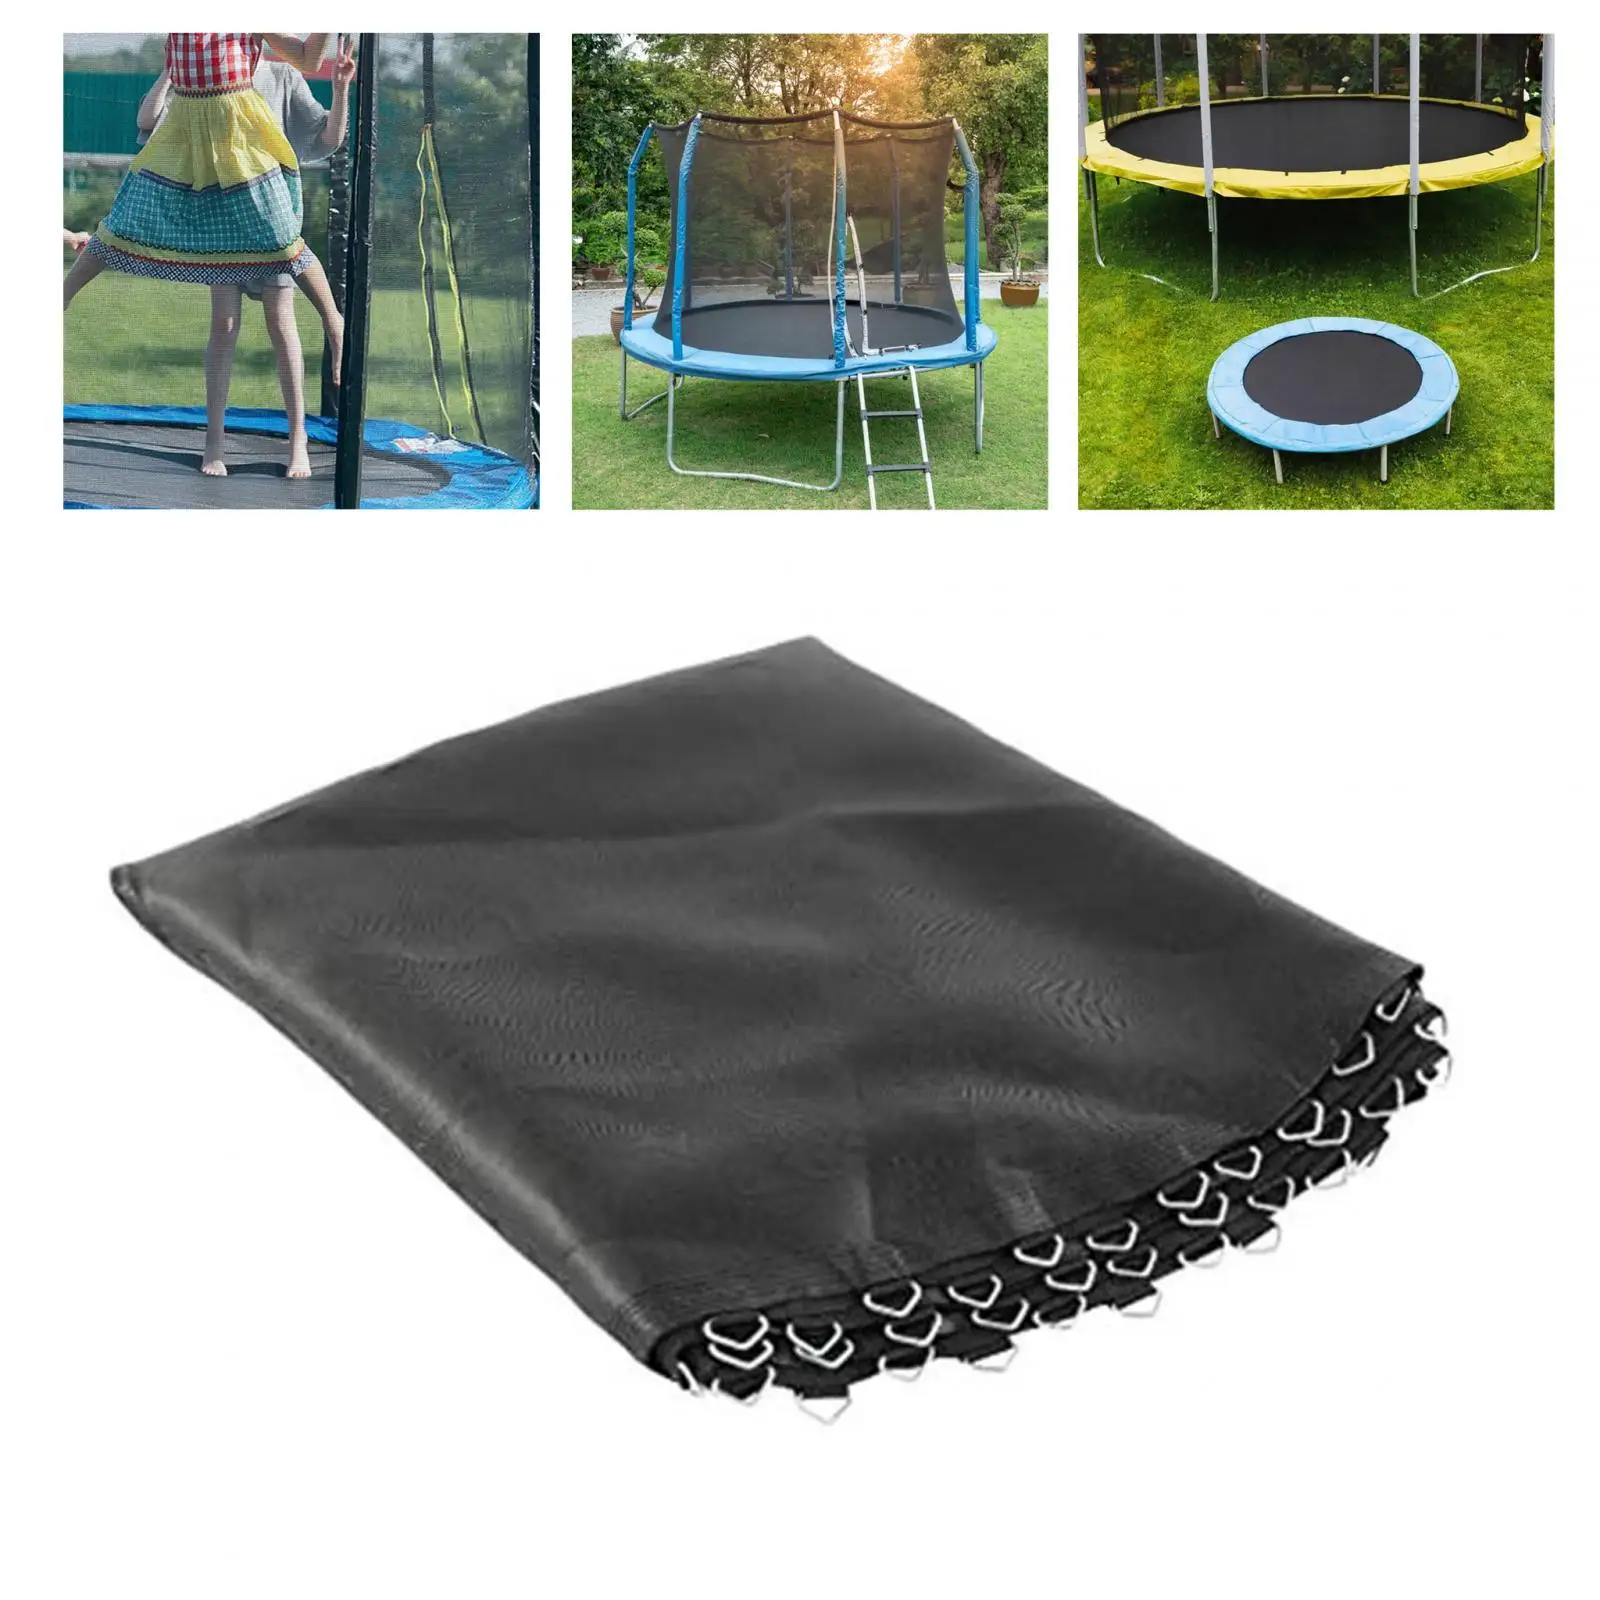 Trampoline mat, training accessories, outdoor gymnastics, trampoline jumping mat